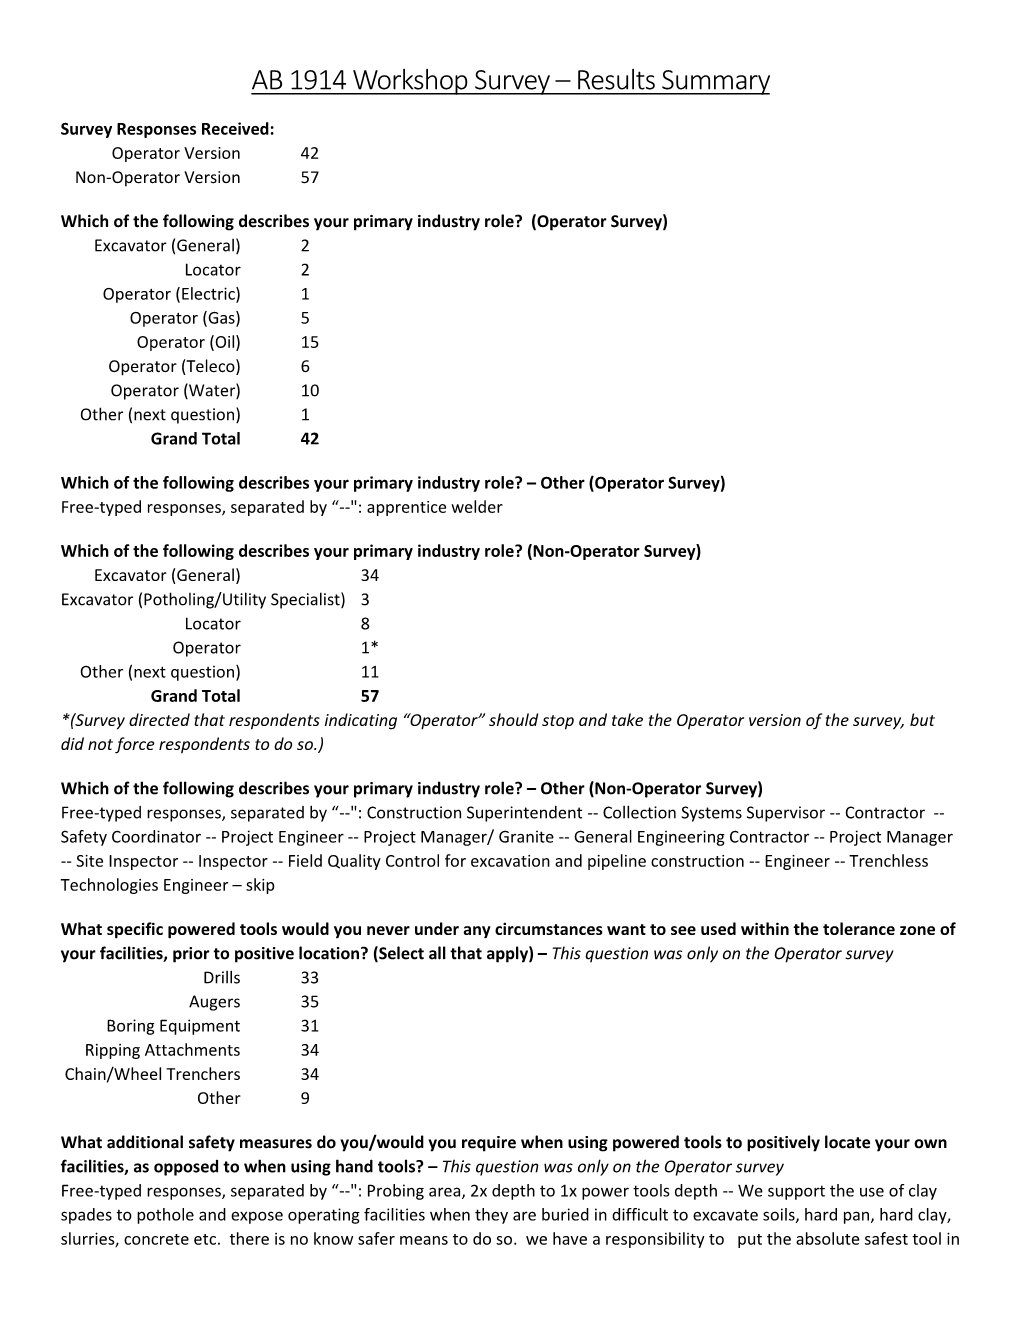 AB 1914 Survey Results Summary